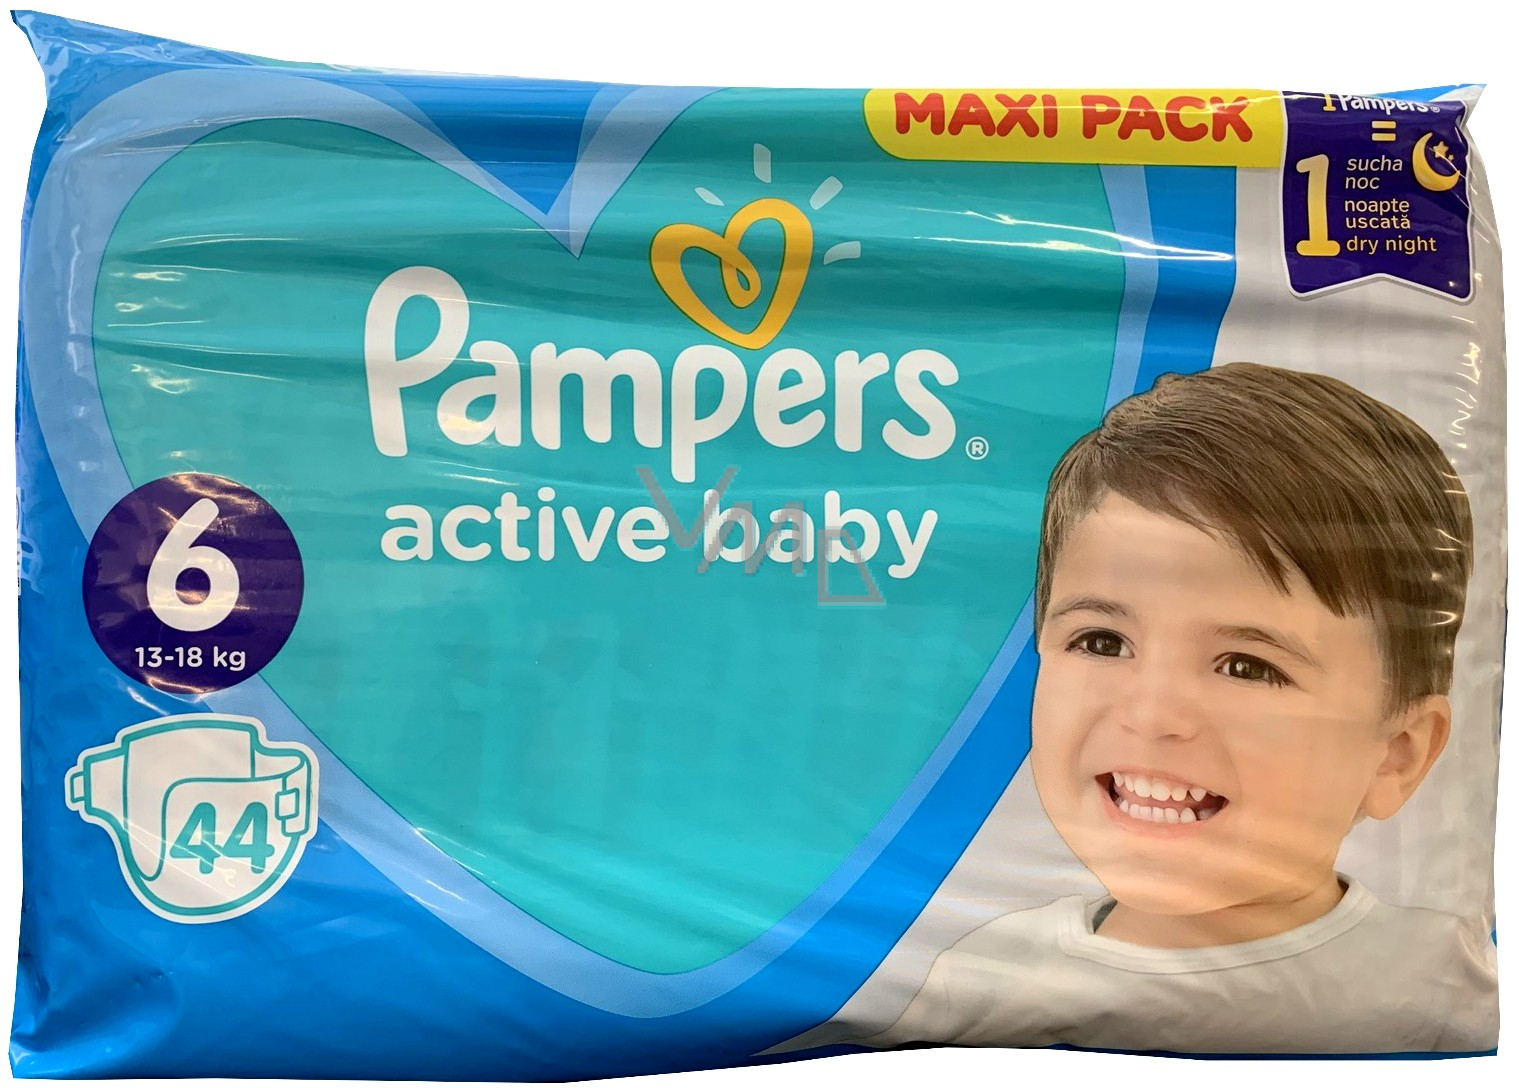 Pampers Active Baby size 13 - 18 kg diaper panties 44 pcs VMD parfumerie drogerie